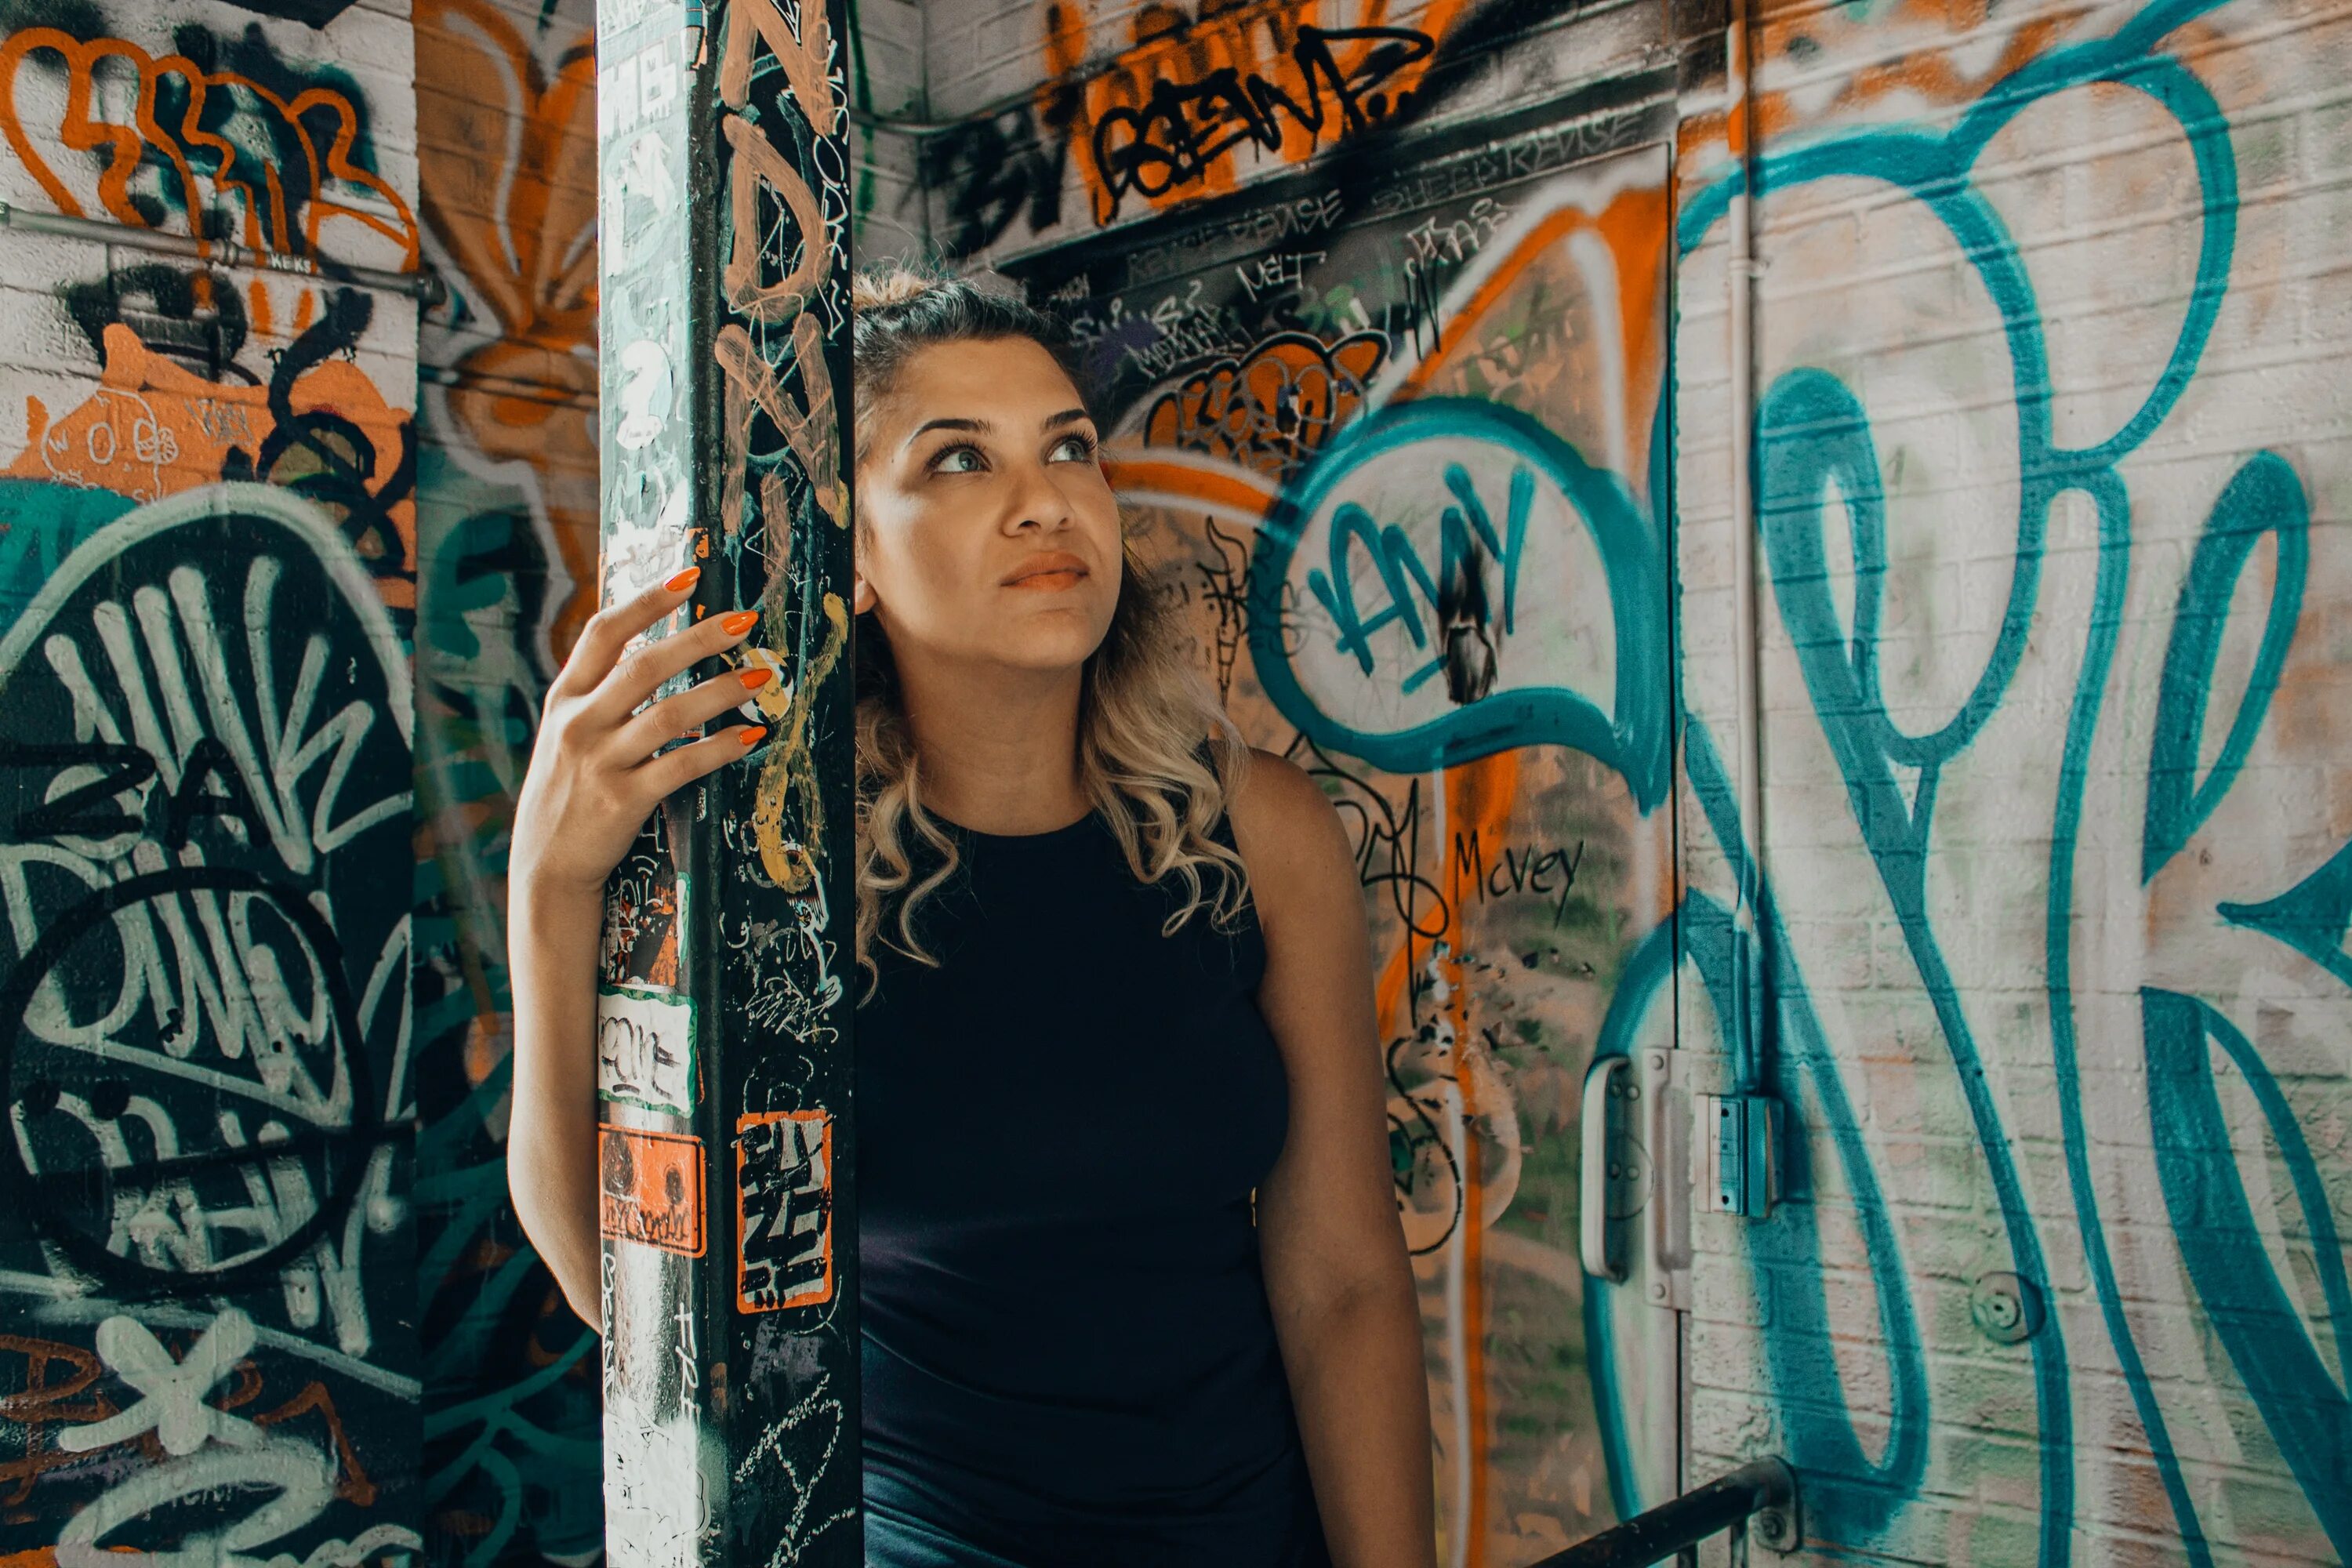 Лица на стенах и полу. Граффити девушка. Девушка на фоне граффити. Фотосессия у стены с граффити. Фотосъемка в стиле стрит арт.